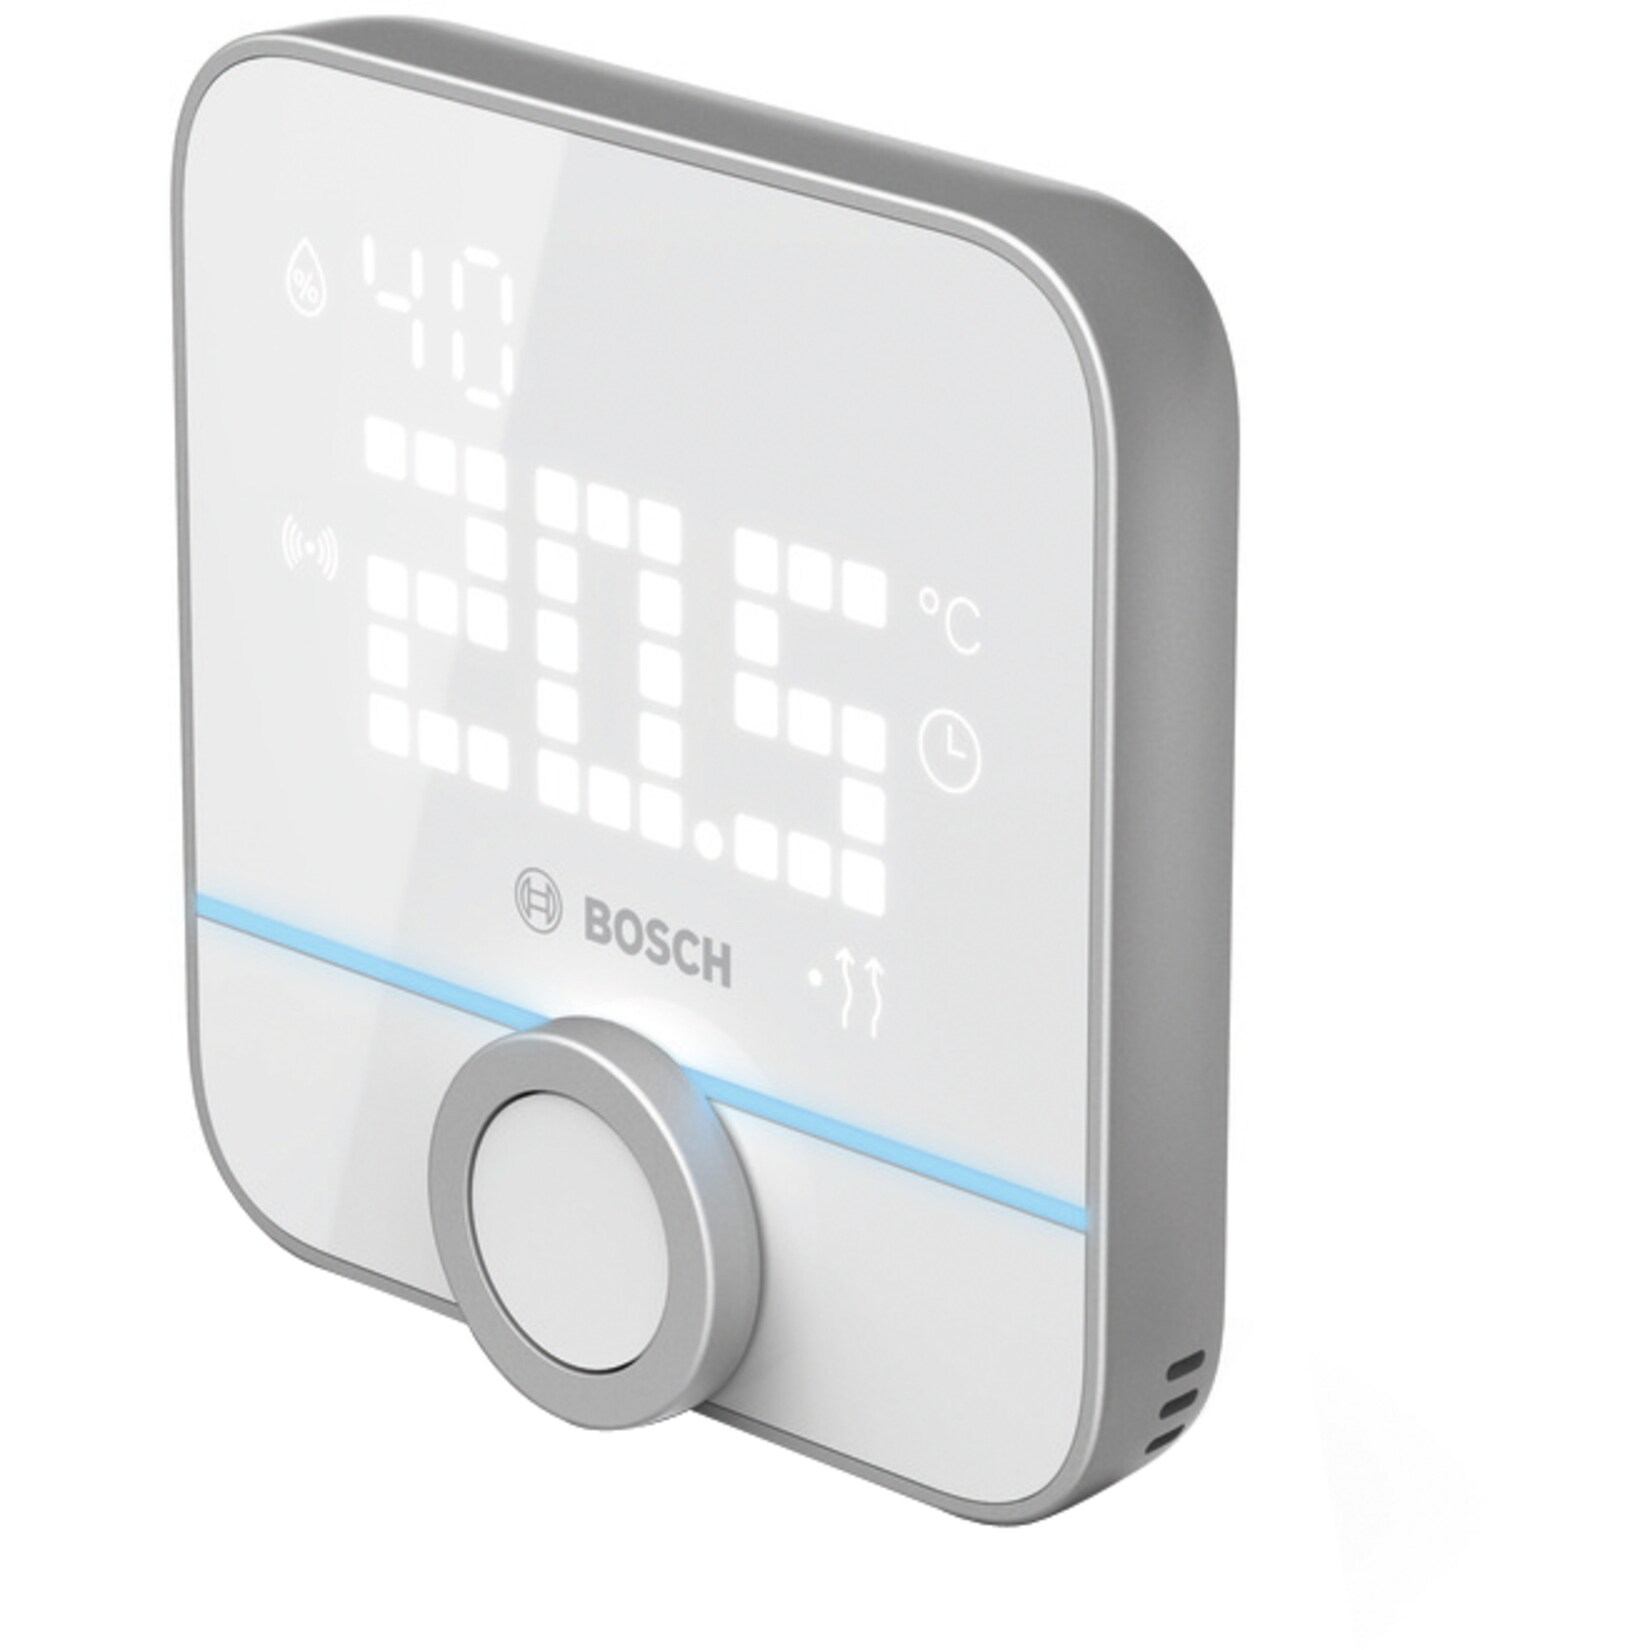 Bosch Thermostat Smart Home Raumthermostat II 230 V